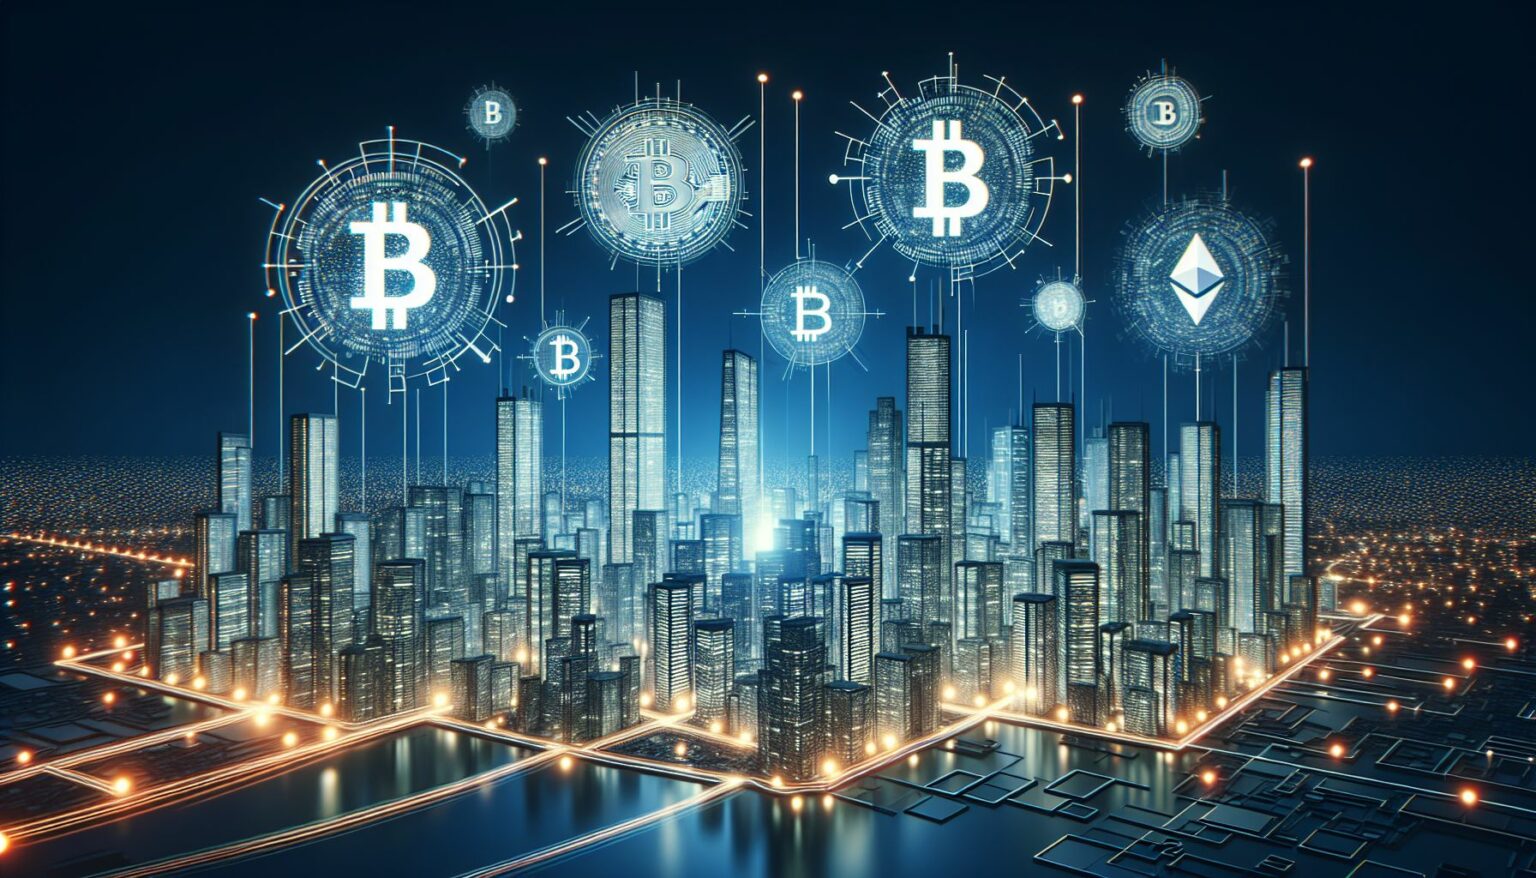 futuristic city skyline with cryptocurrency symbols